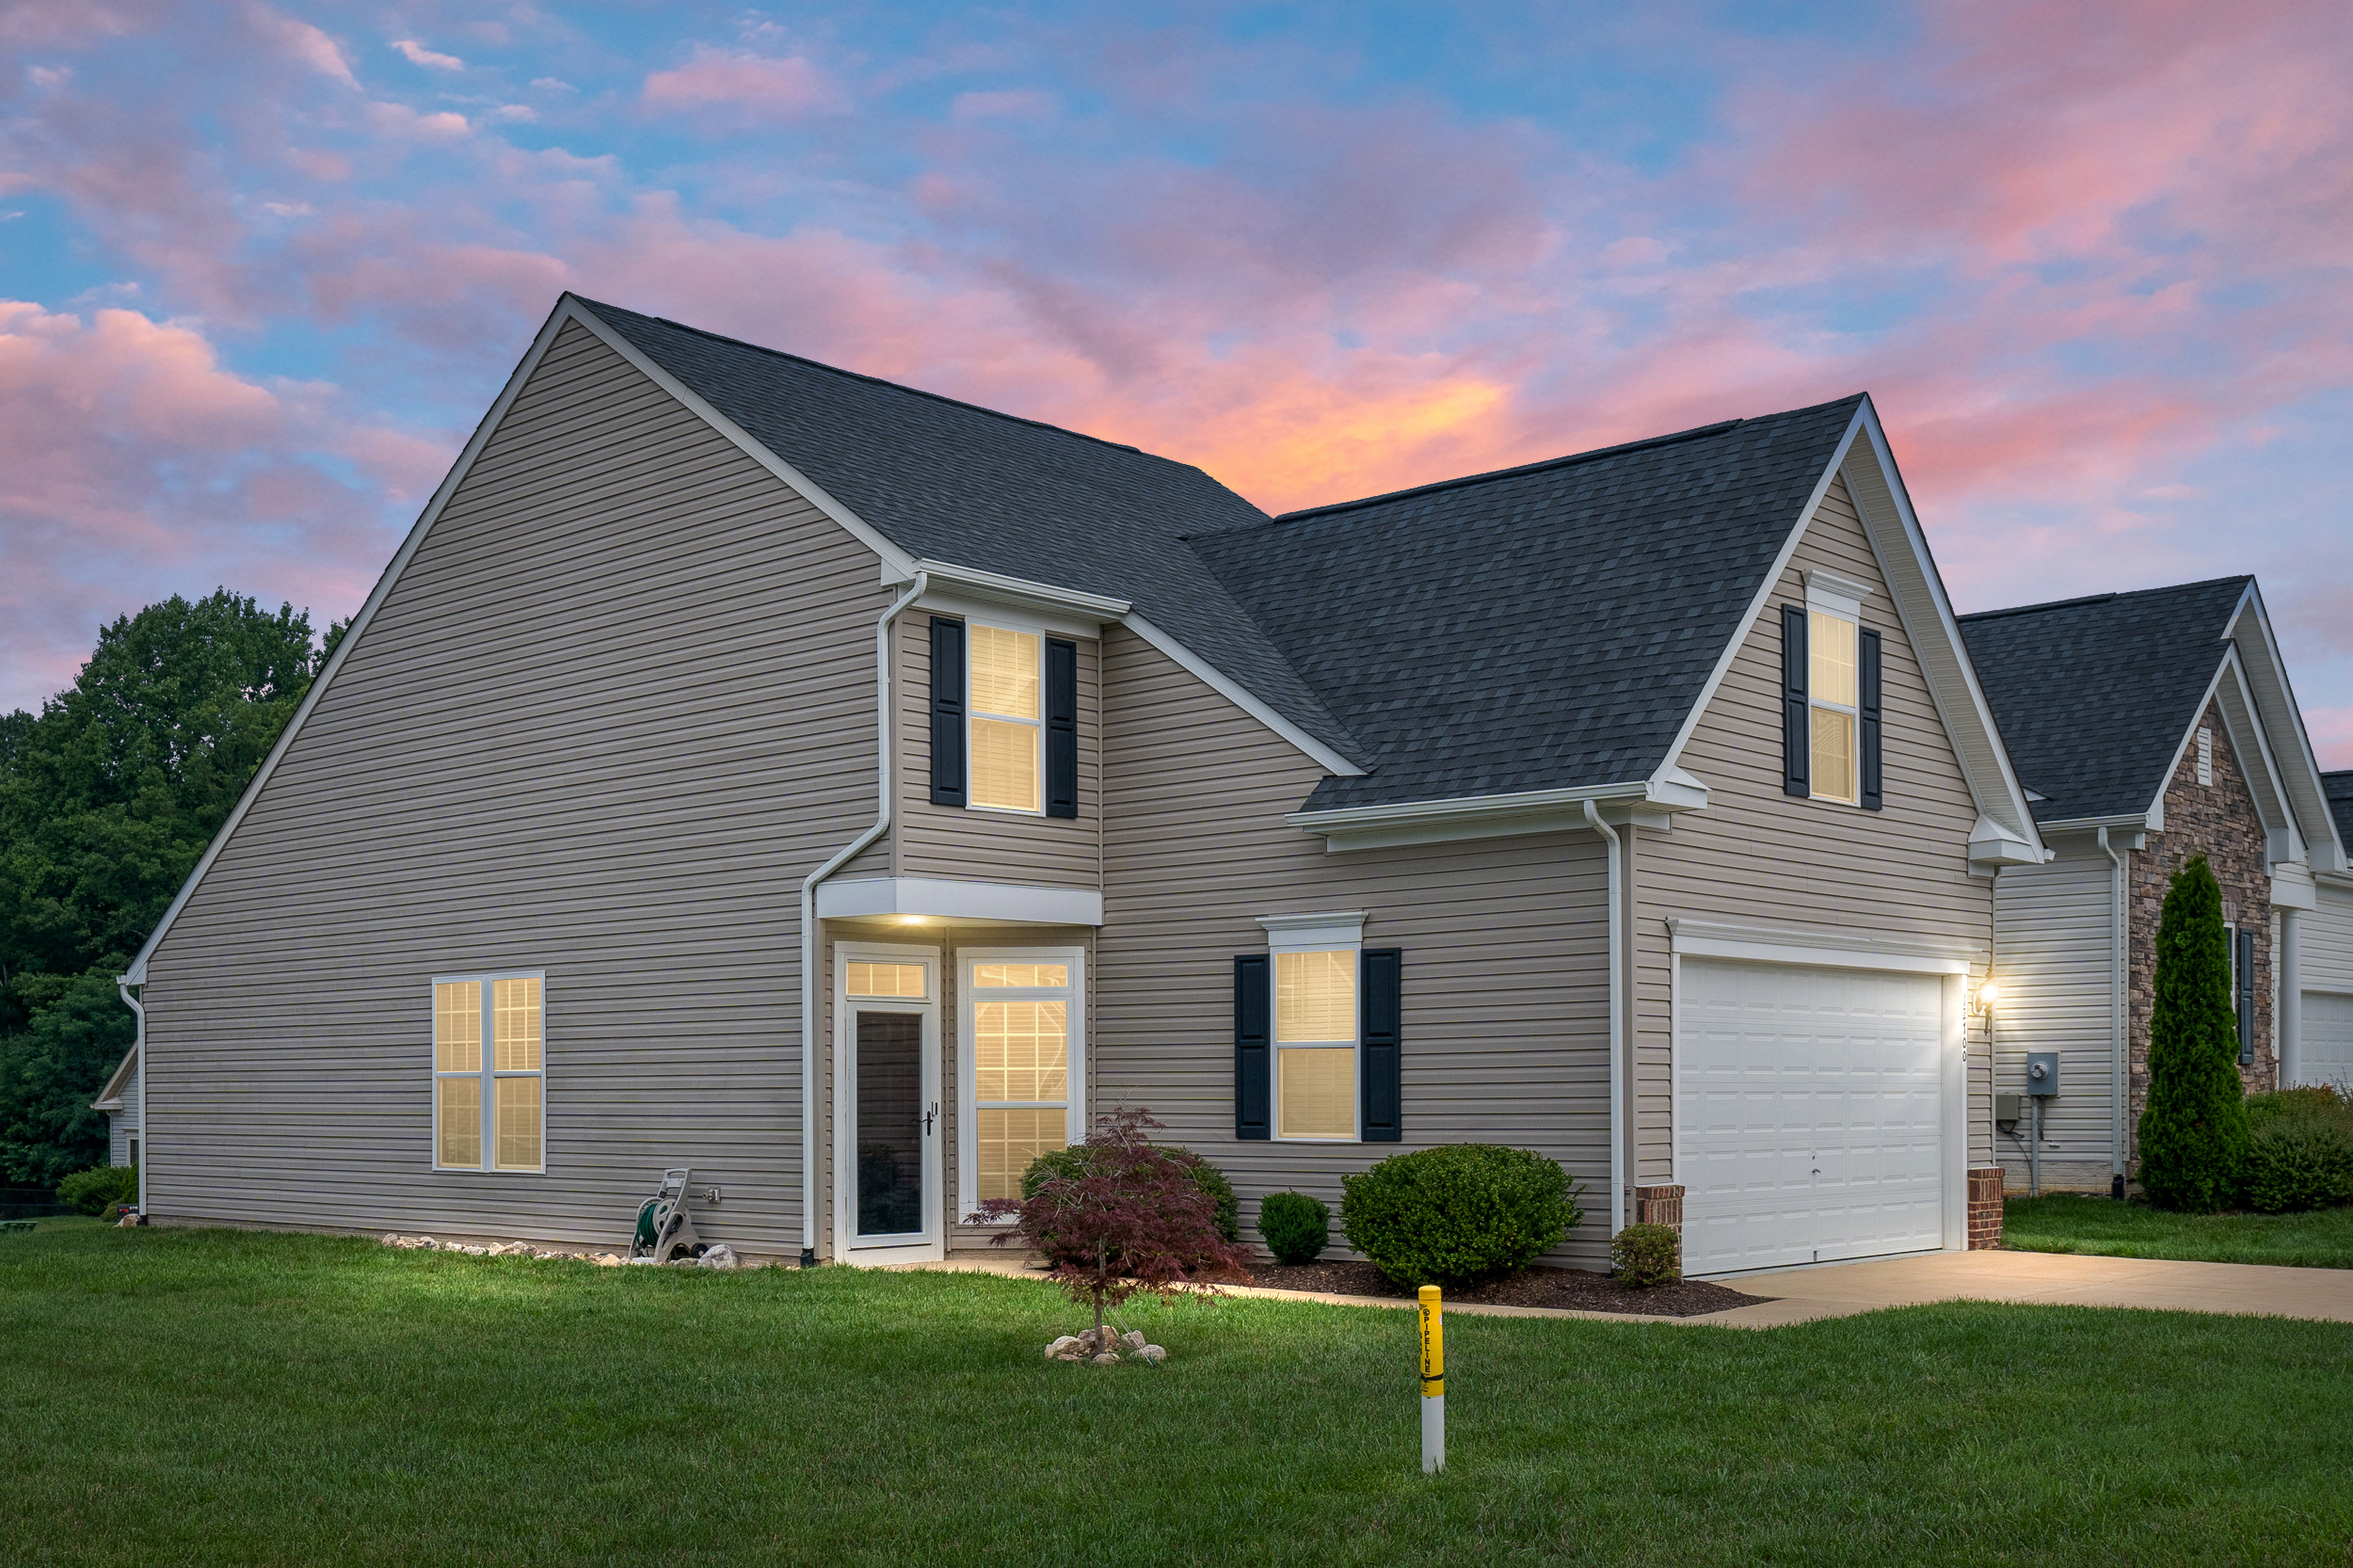 Houses for sale in 55 plus communities in Fredericksburg VA